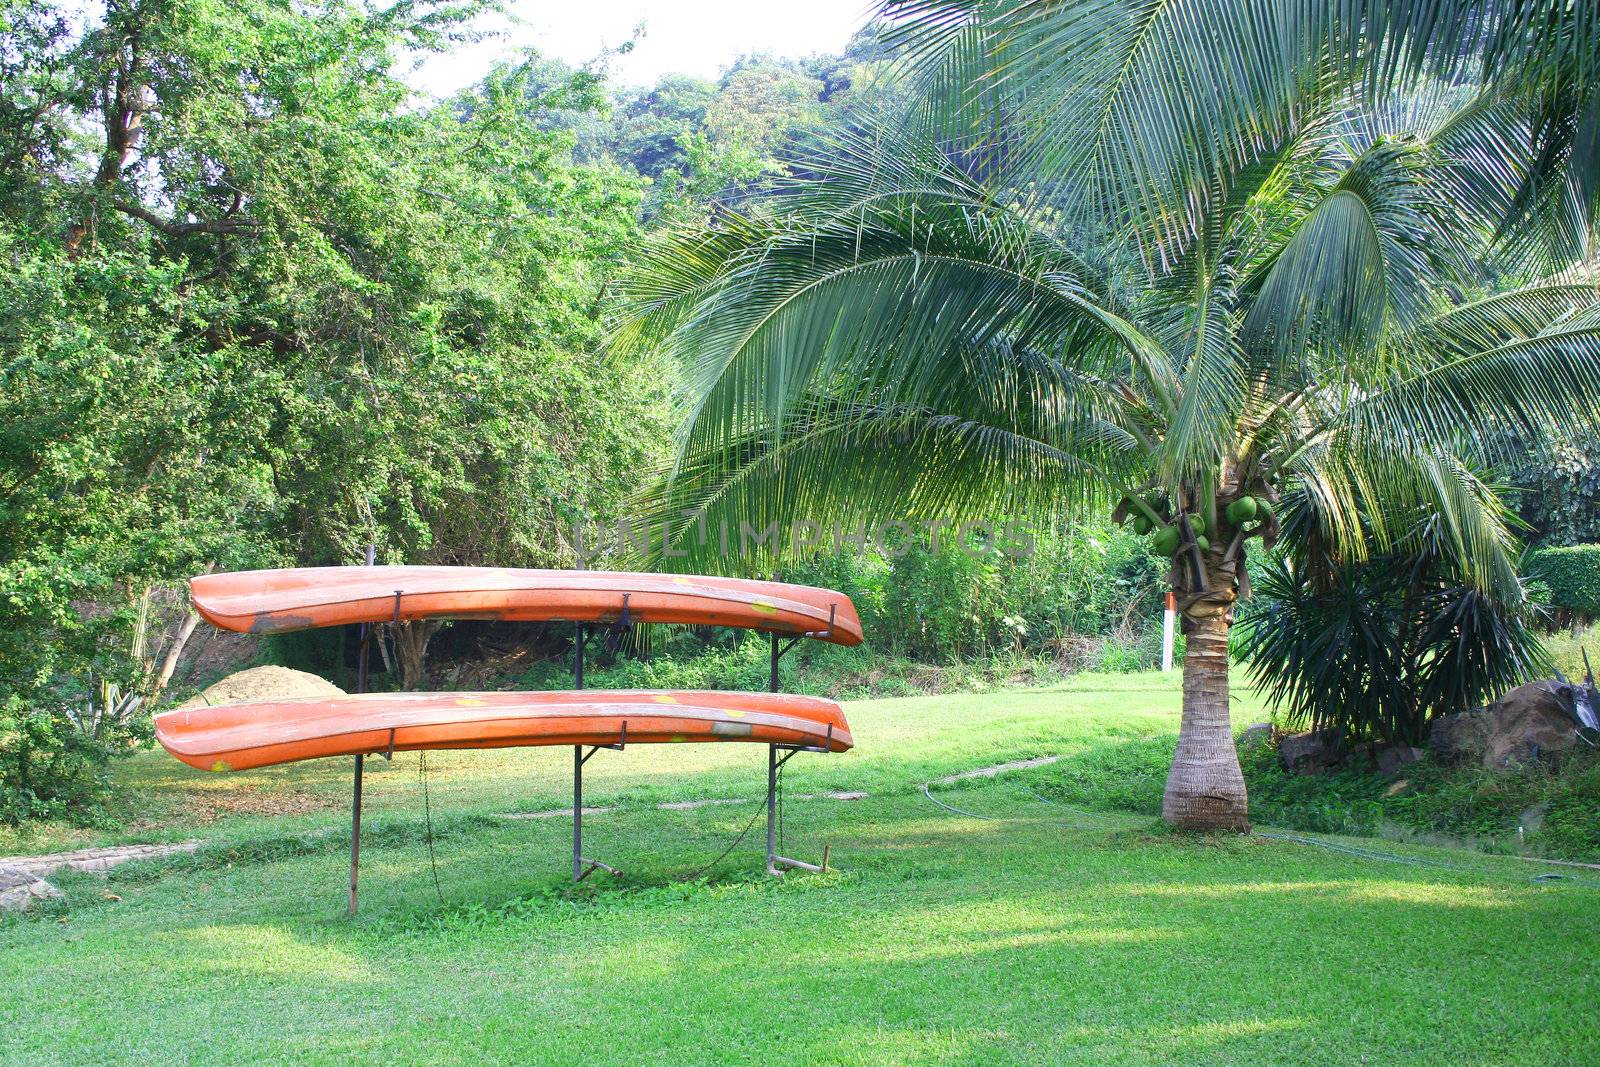 Sea Kayaks on rack at resort